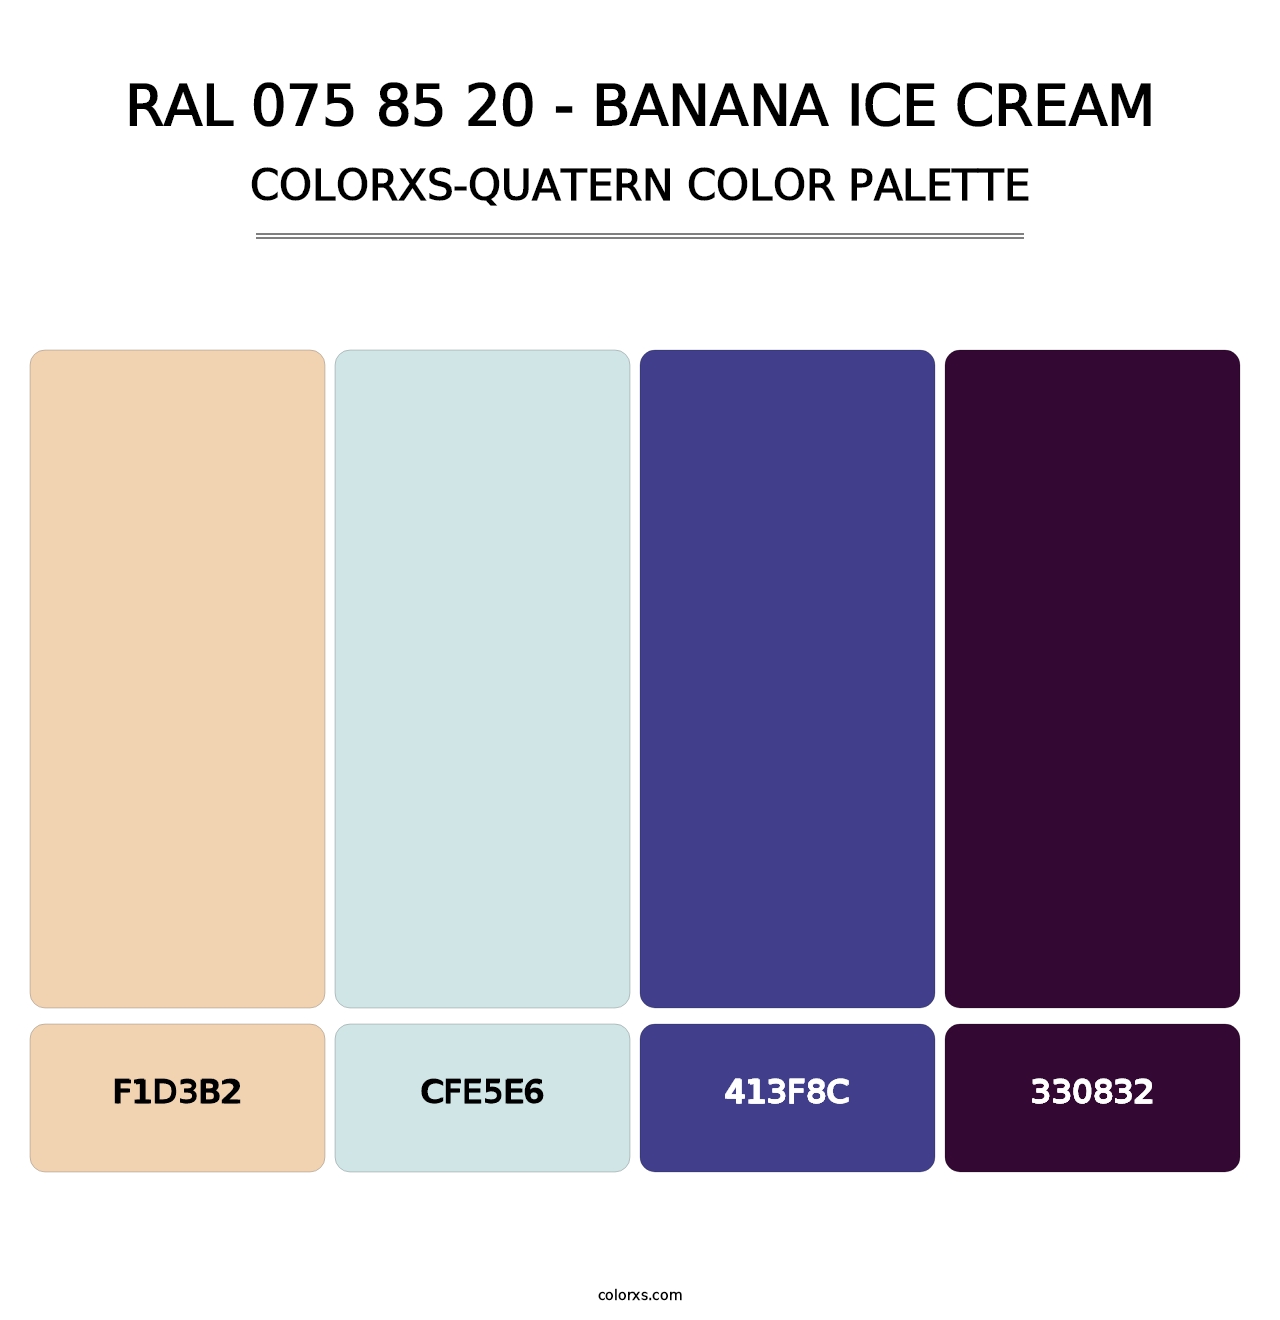 RAL 075 85 20 - Banana Ice Cream - Colorxs Quatern Palette